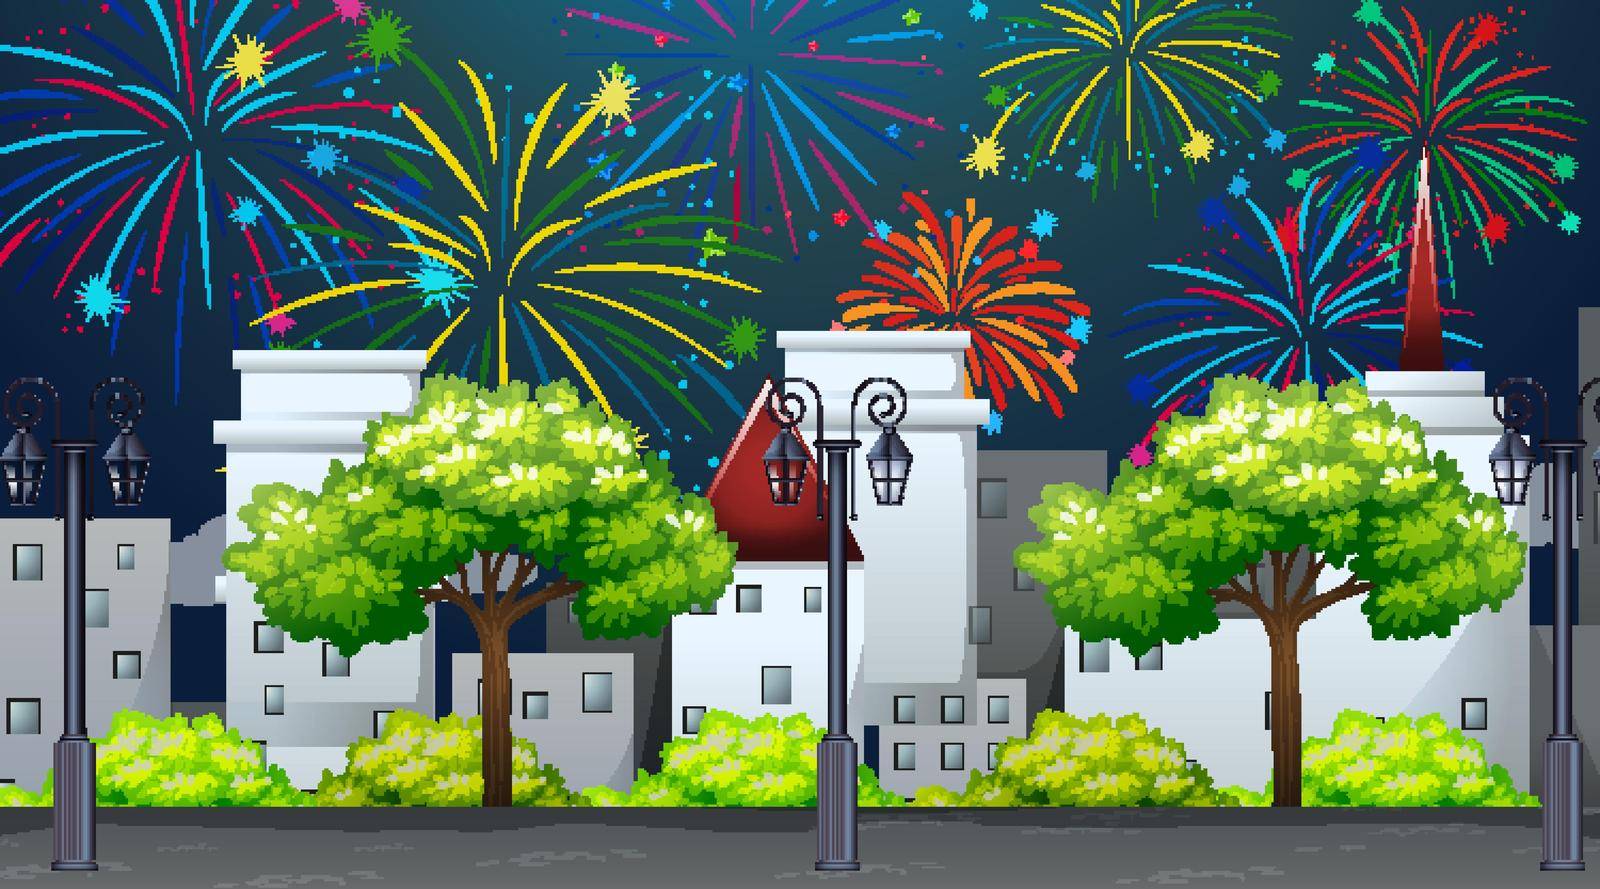 Cityscape with celebration fireworks scene illustration